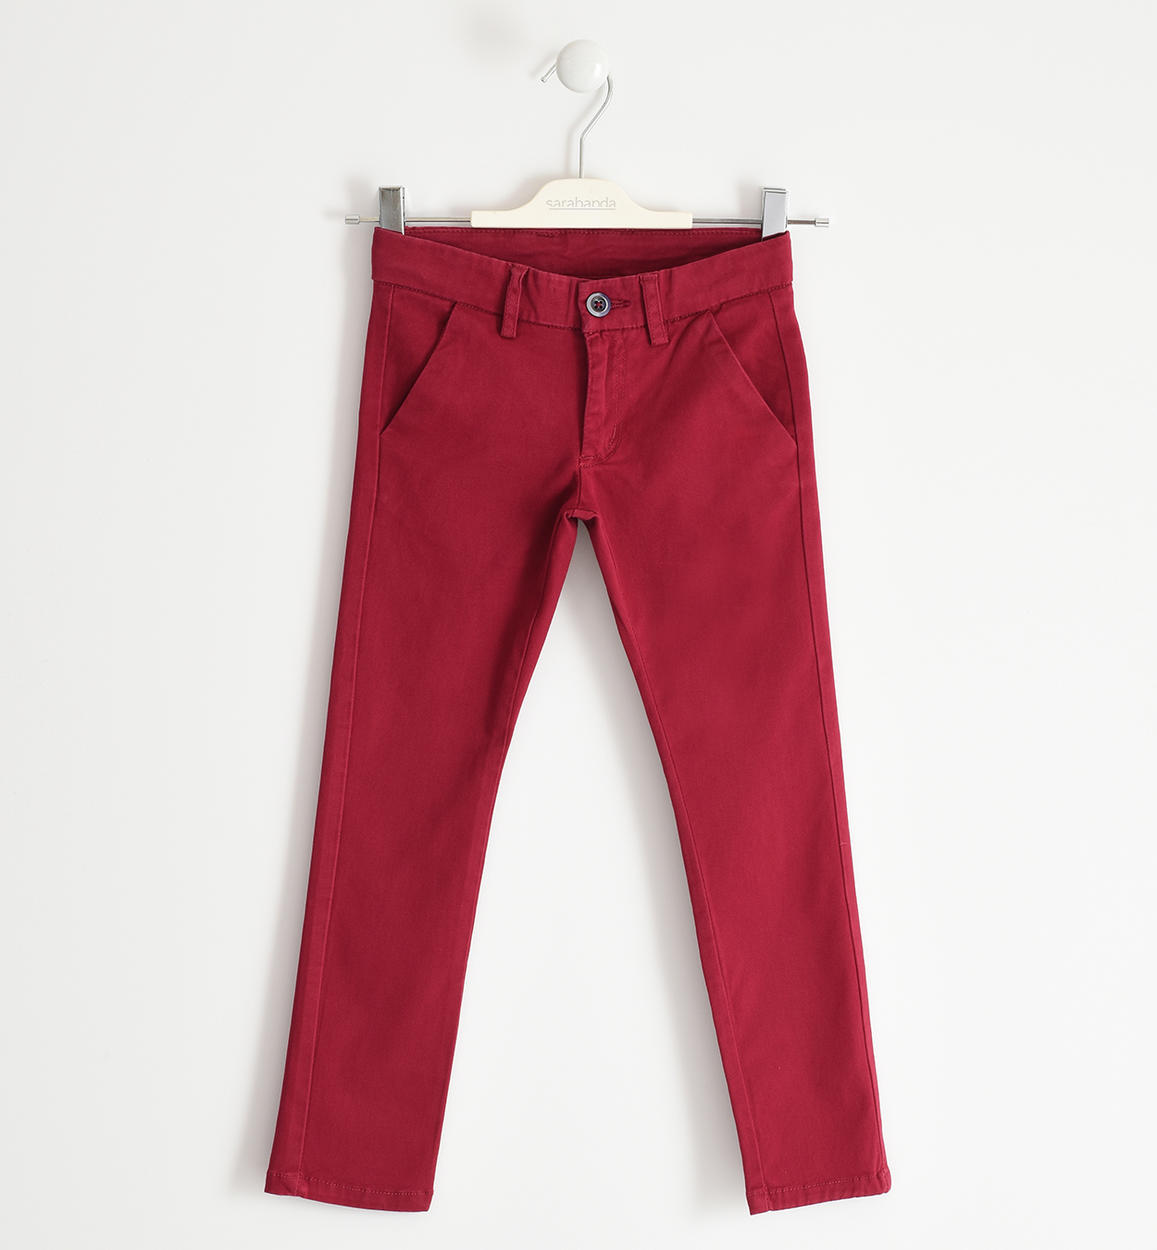 Pantalone classico in twill stretch slim fit ROSA Sarabanda